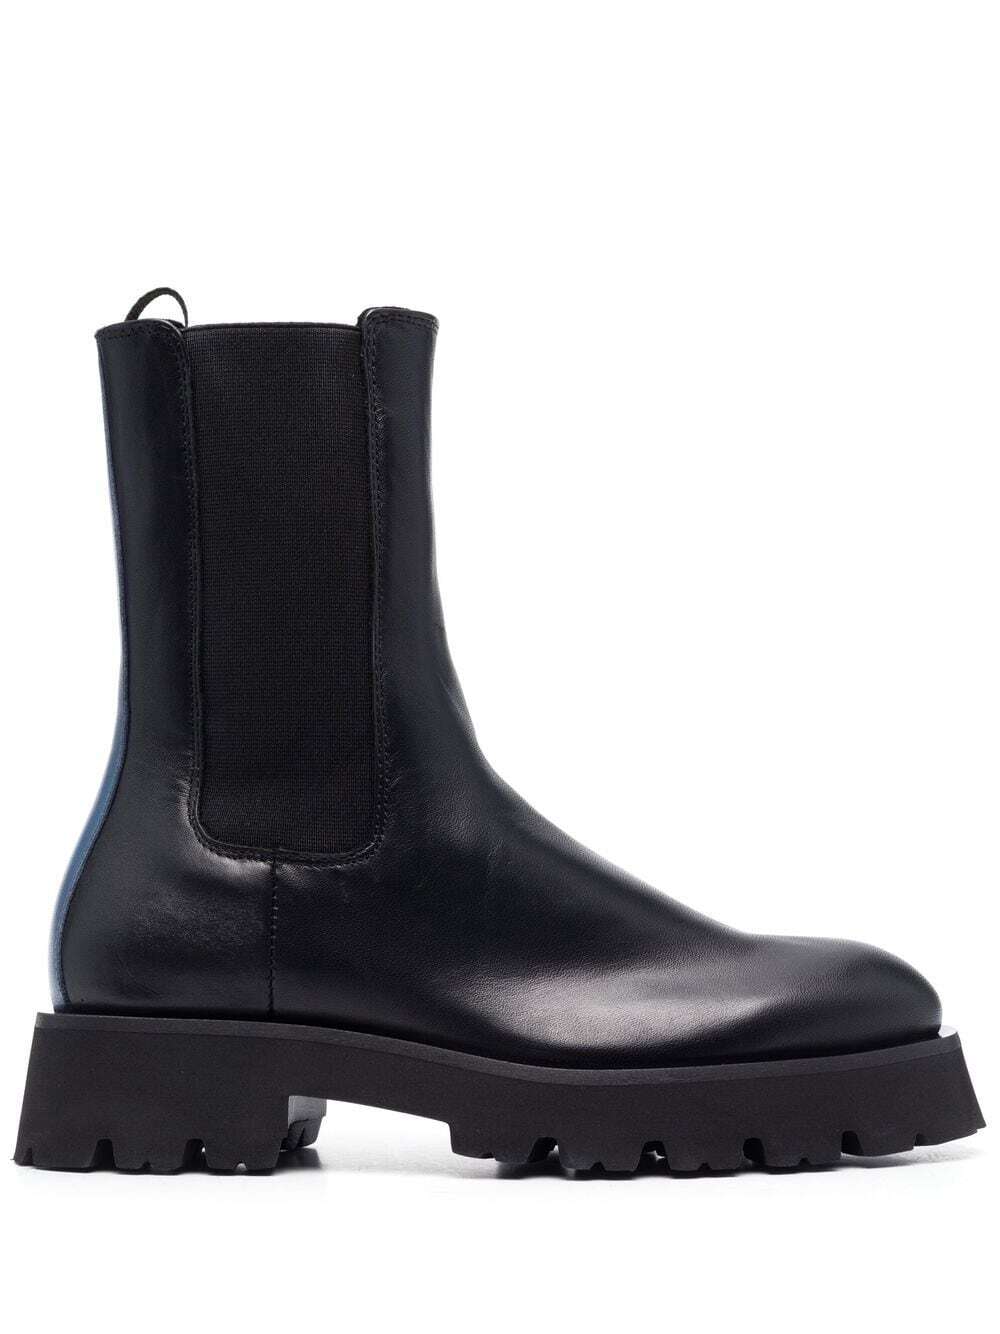 Paul Smith Klea leather boots - Black